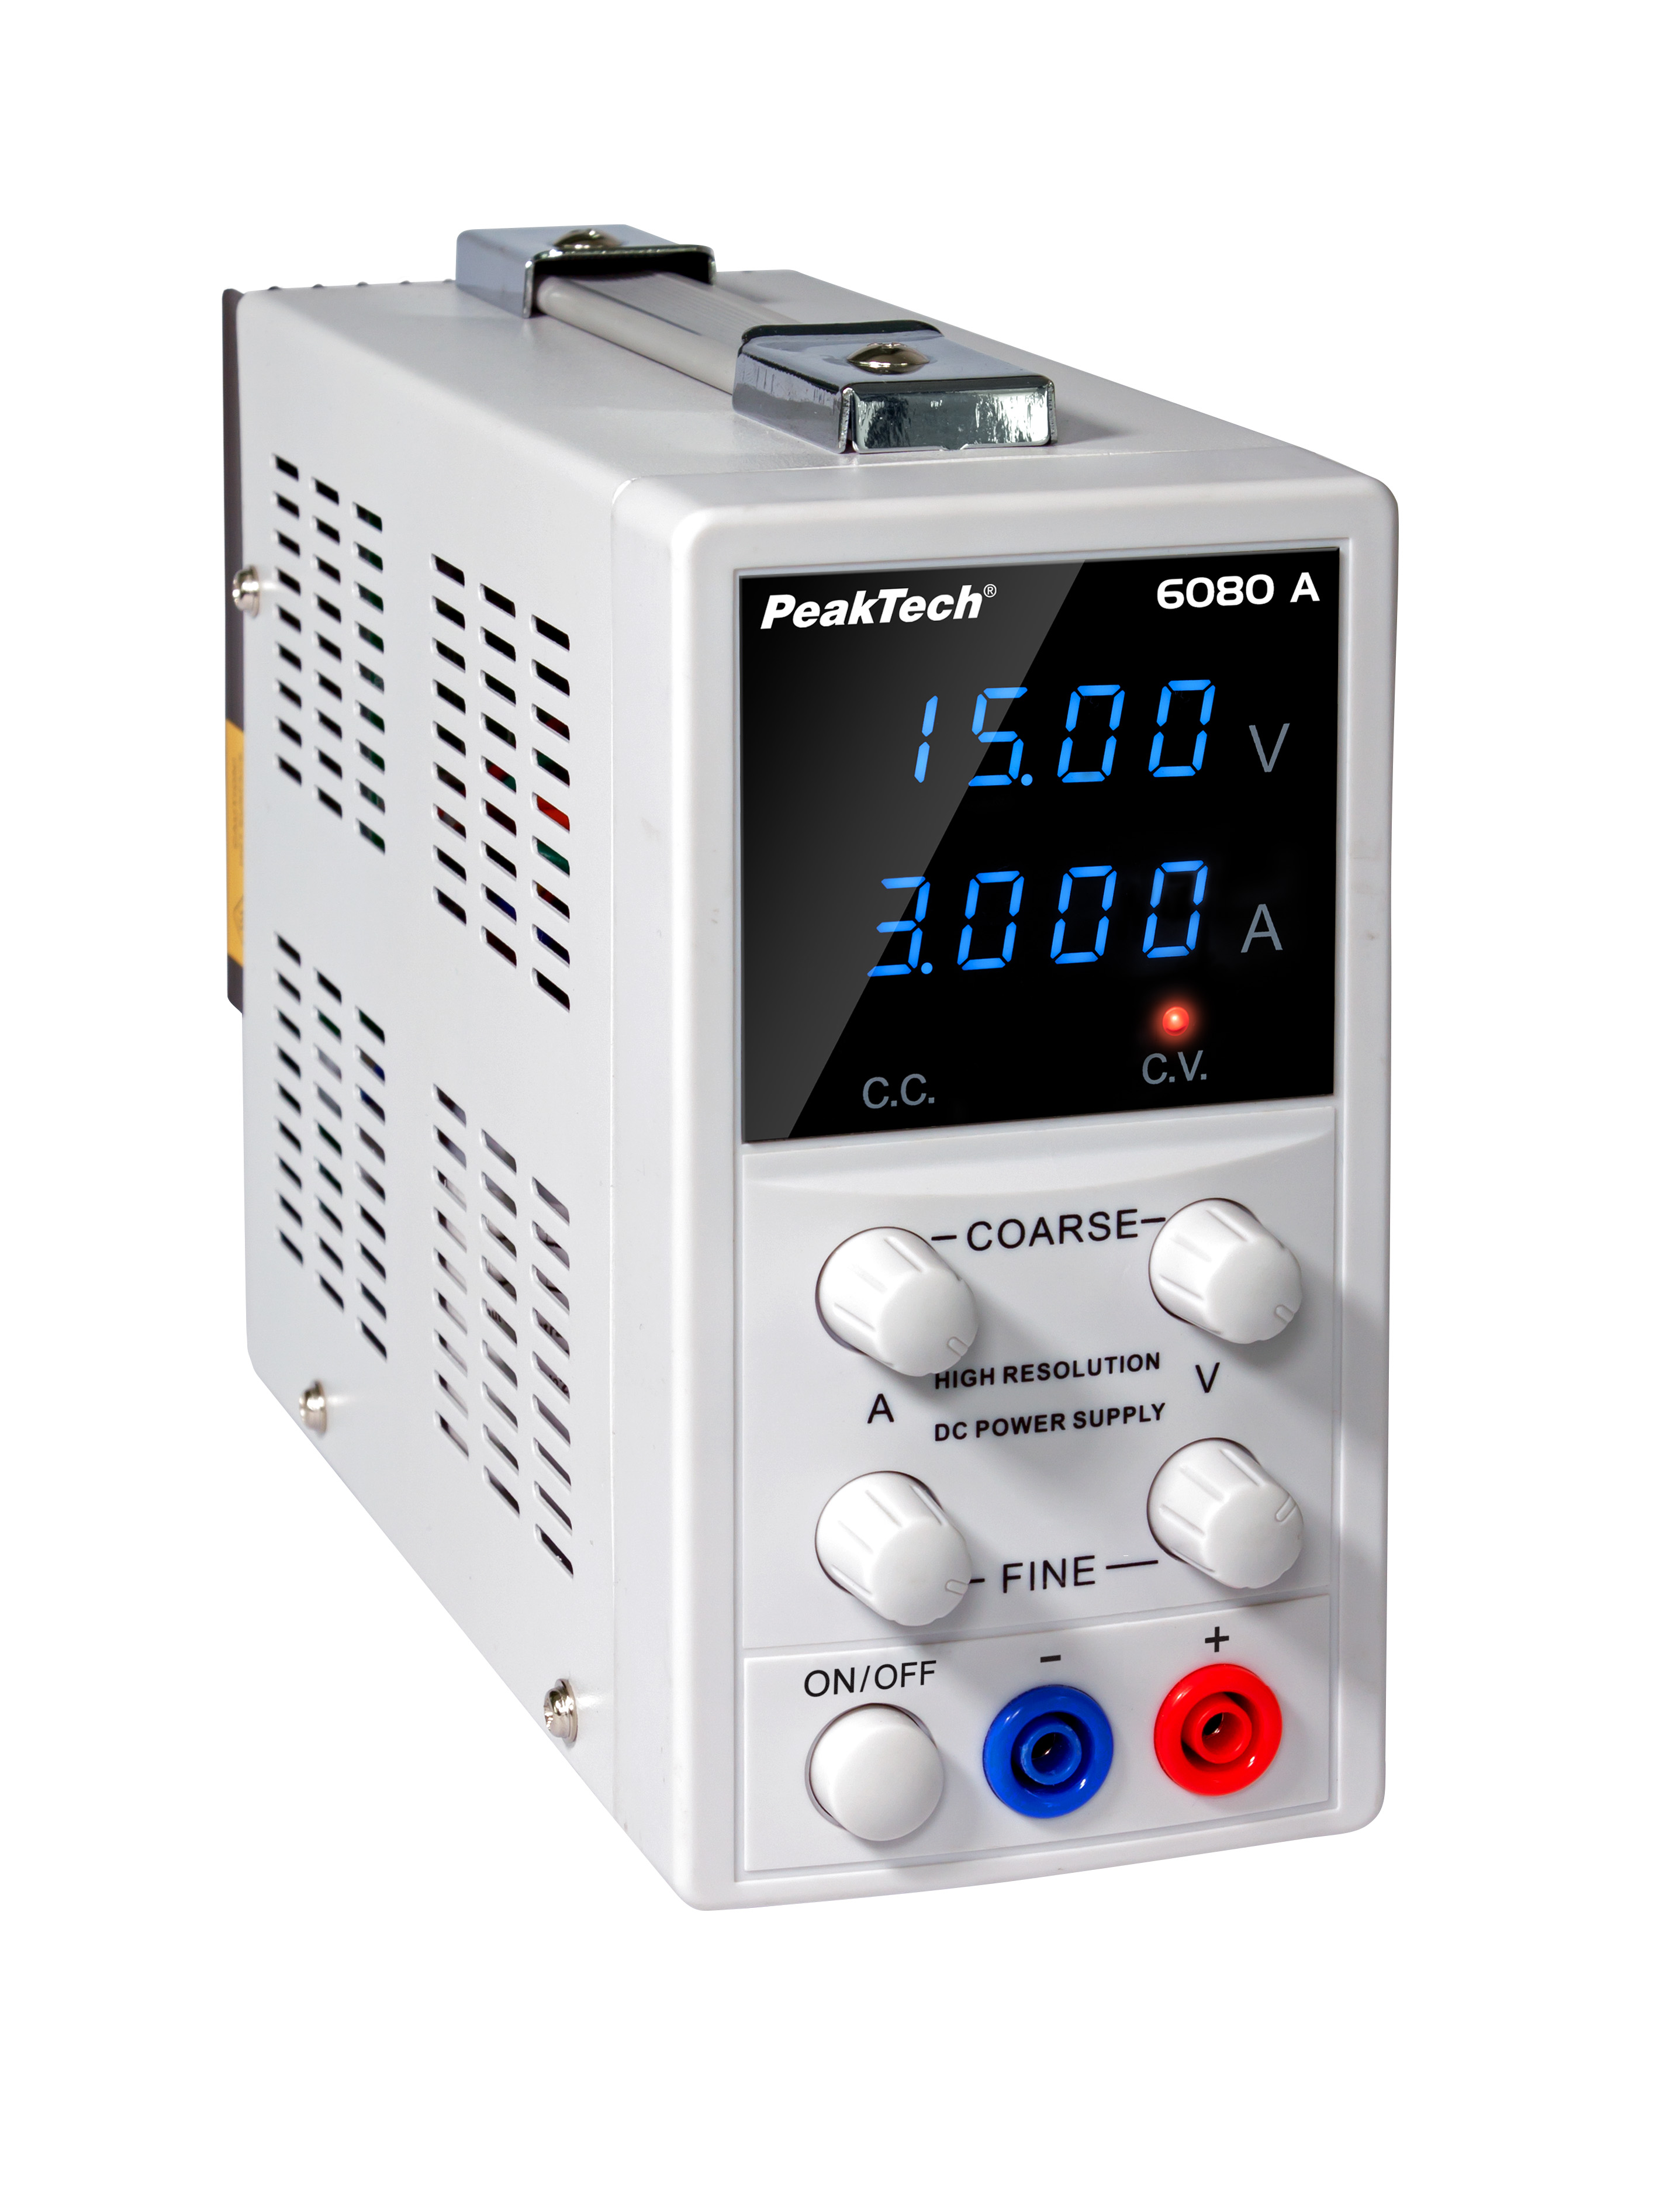 «PeakTech® P 6080 A» Digital Laboratory Power Supply, 0-15 V/0-3 A DC